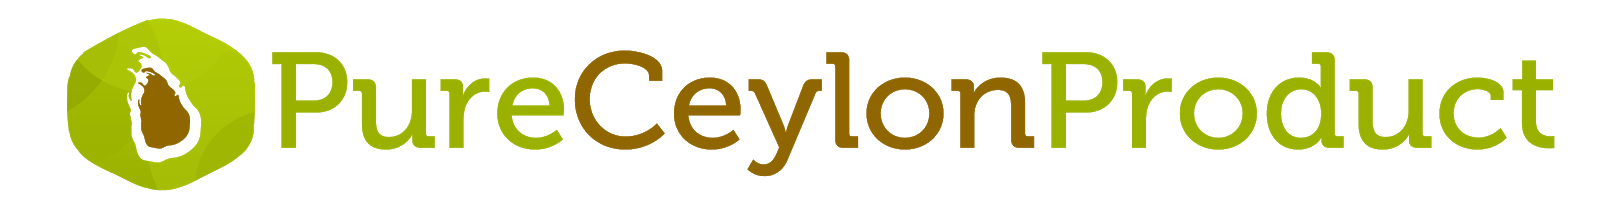 PureCeylonProduct | Buy Organic Ceylon Products Today